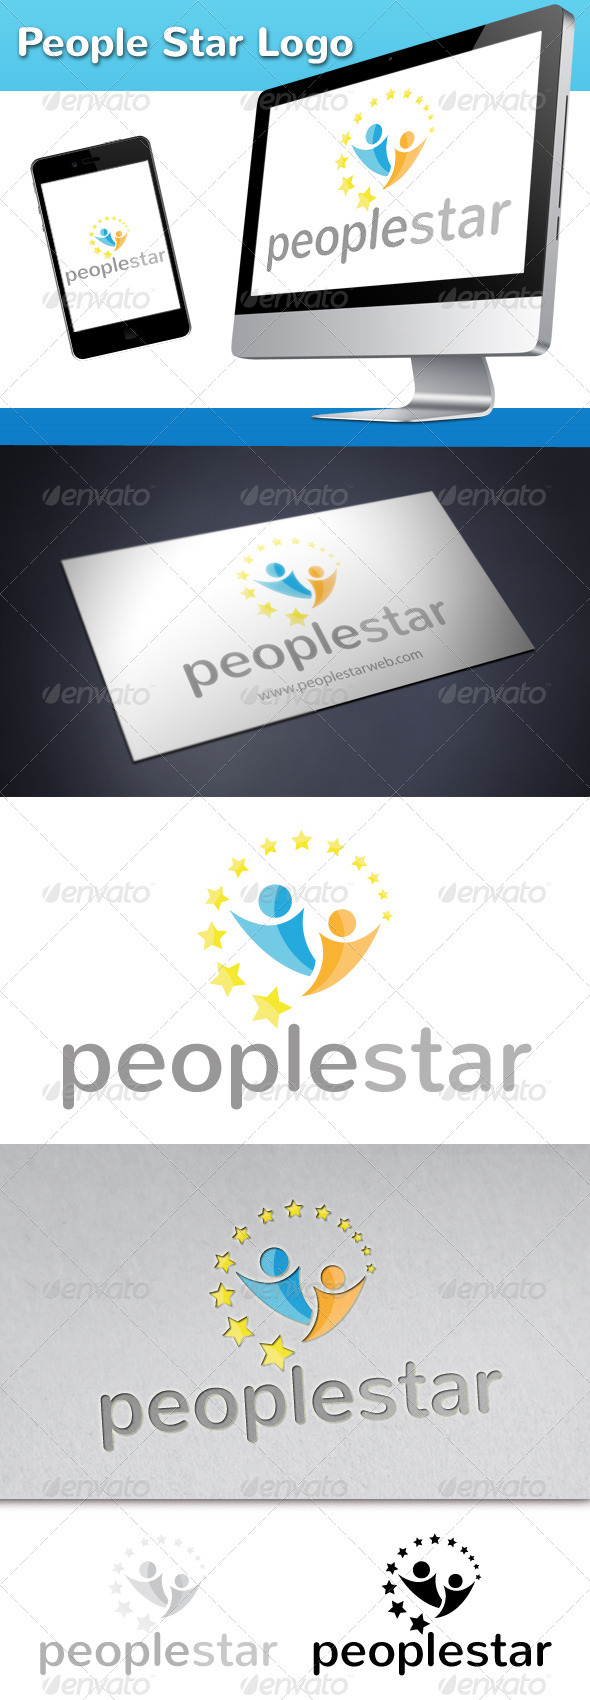 People Star Logo